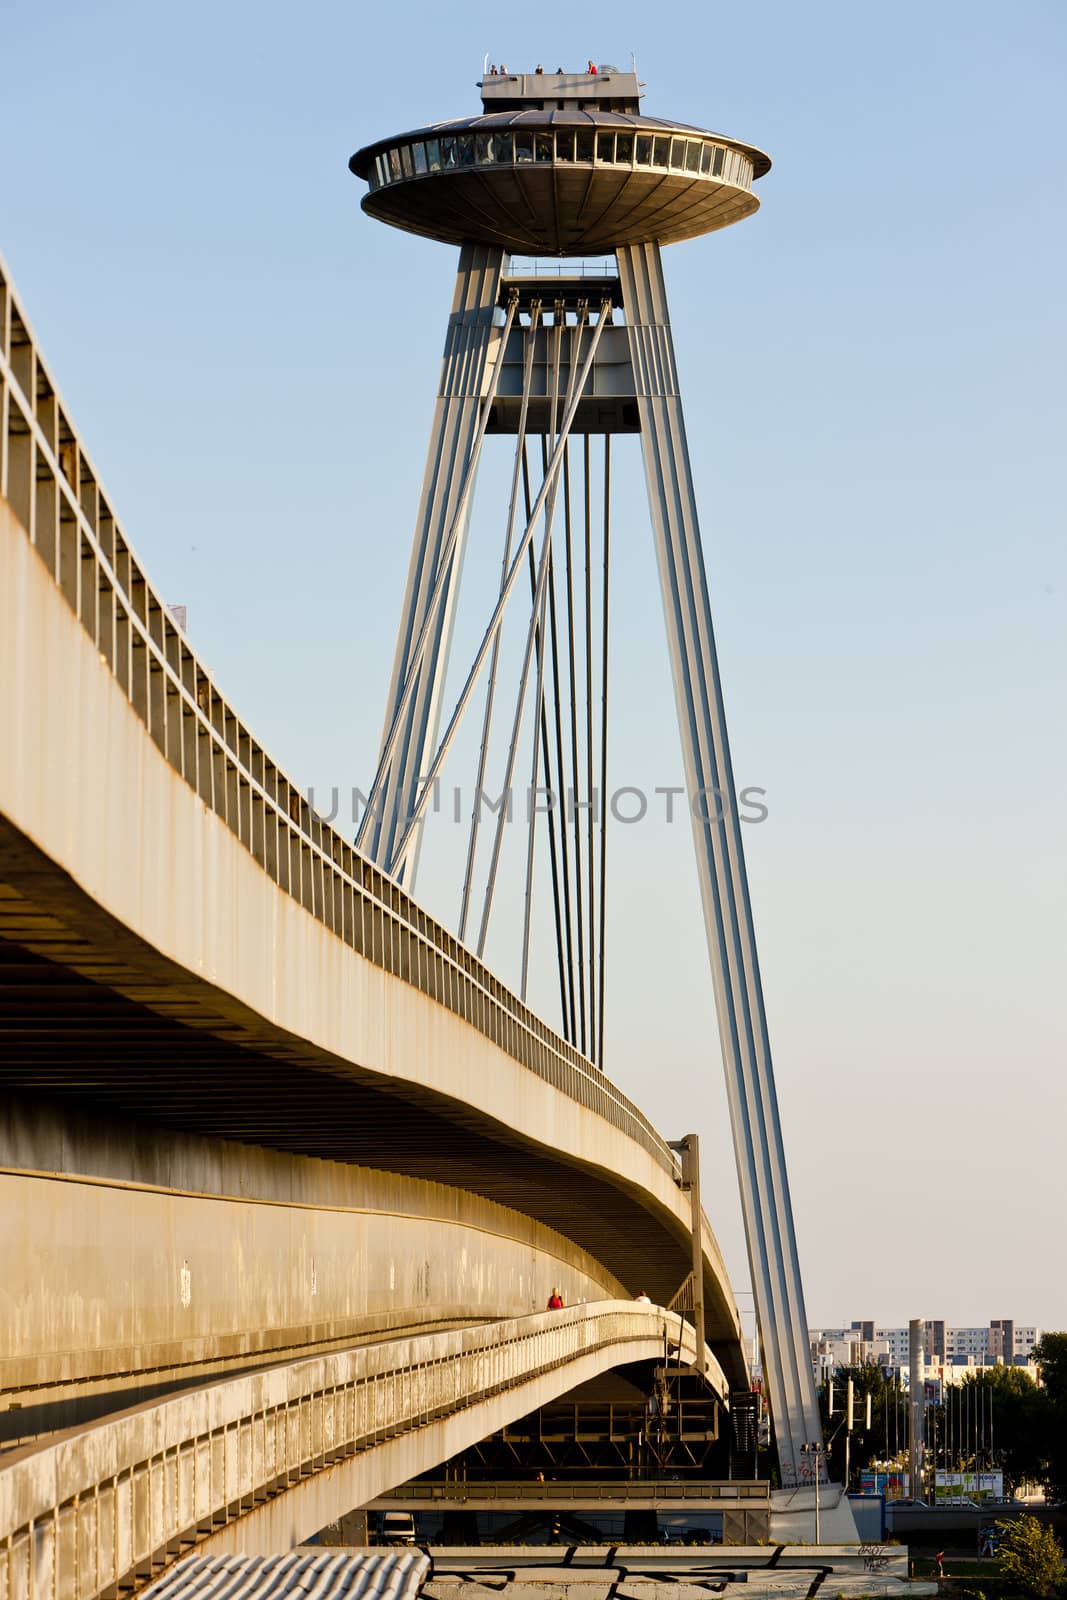 New Bridge, Bratislava, Slovakia by phbcz